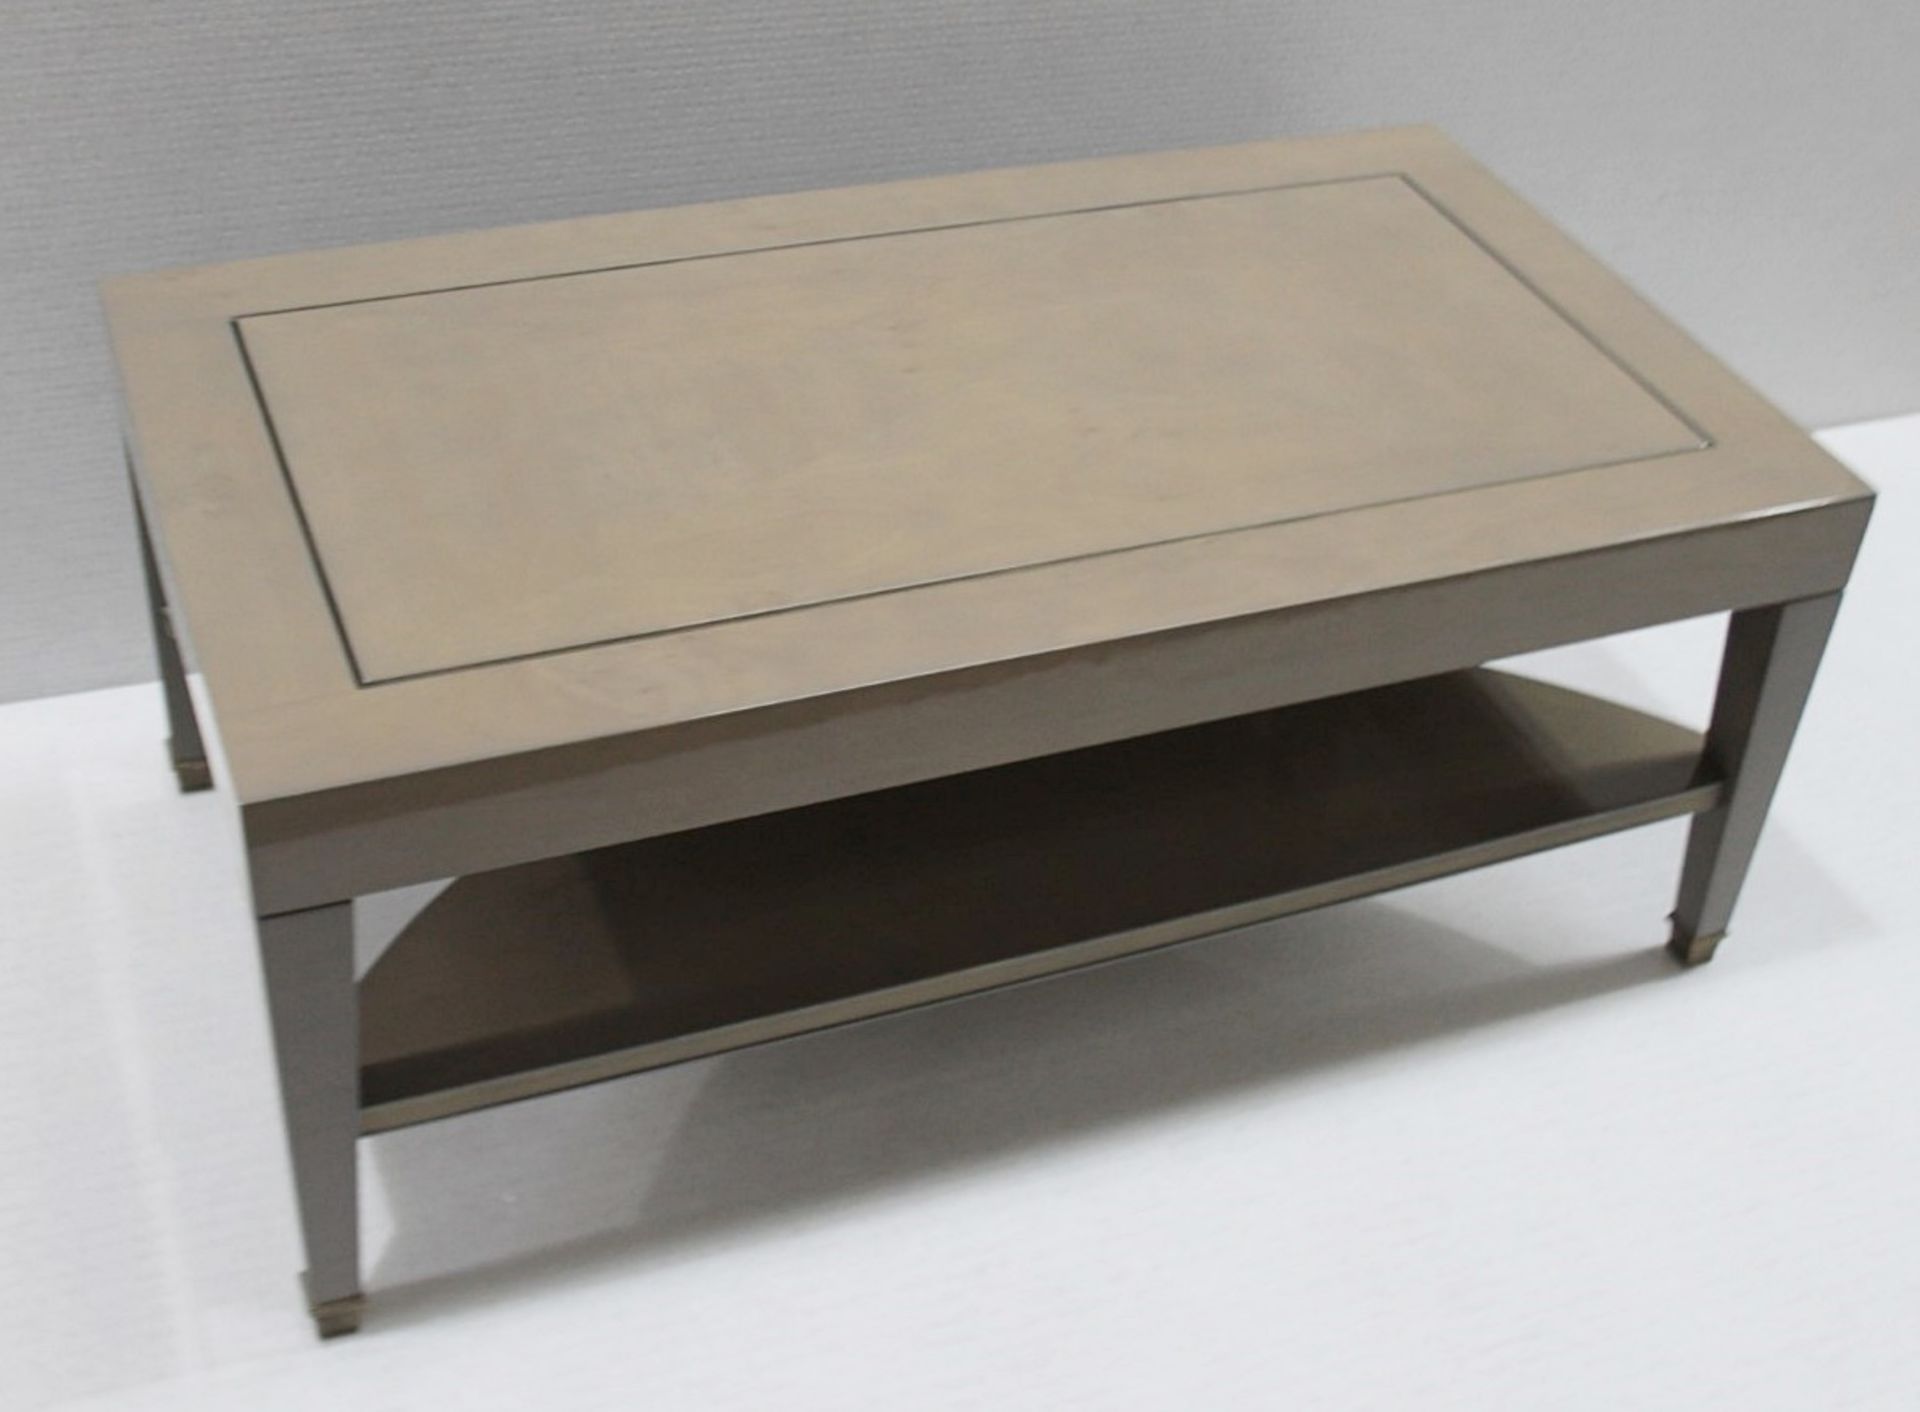 1 x JUSTIN VAN BREDA 'Legacy Alexander' Designer Lacquered Coffee Table With Undershelf - RRP £5,000 - Image 6 of 9